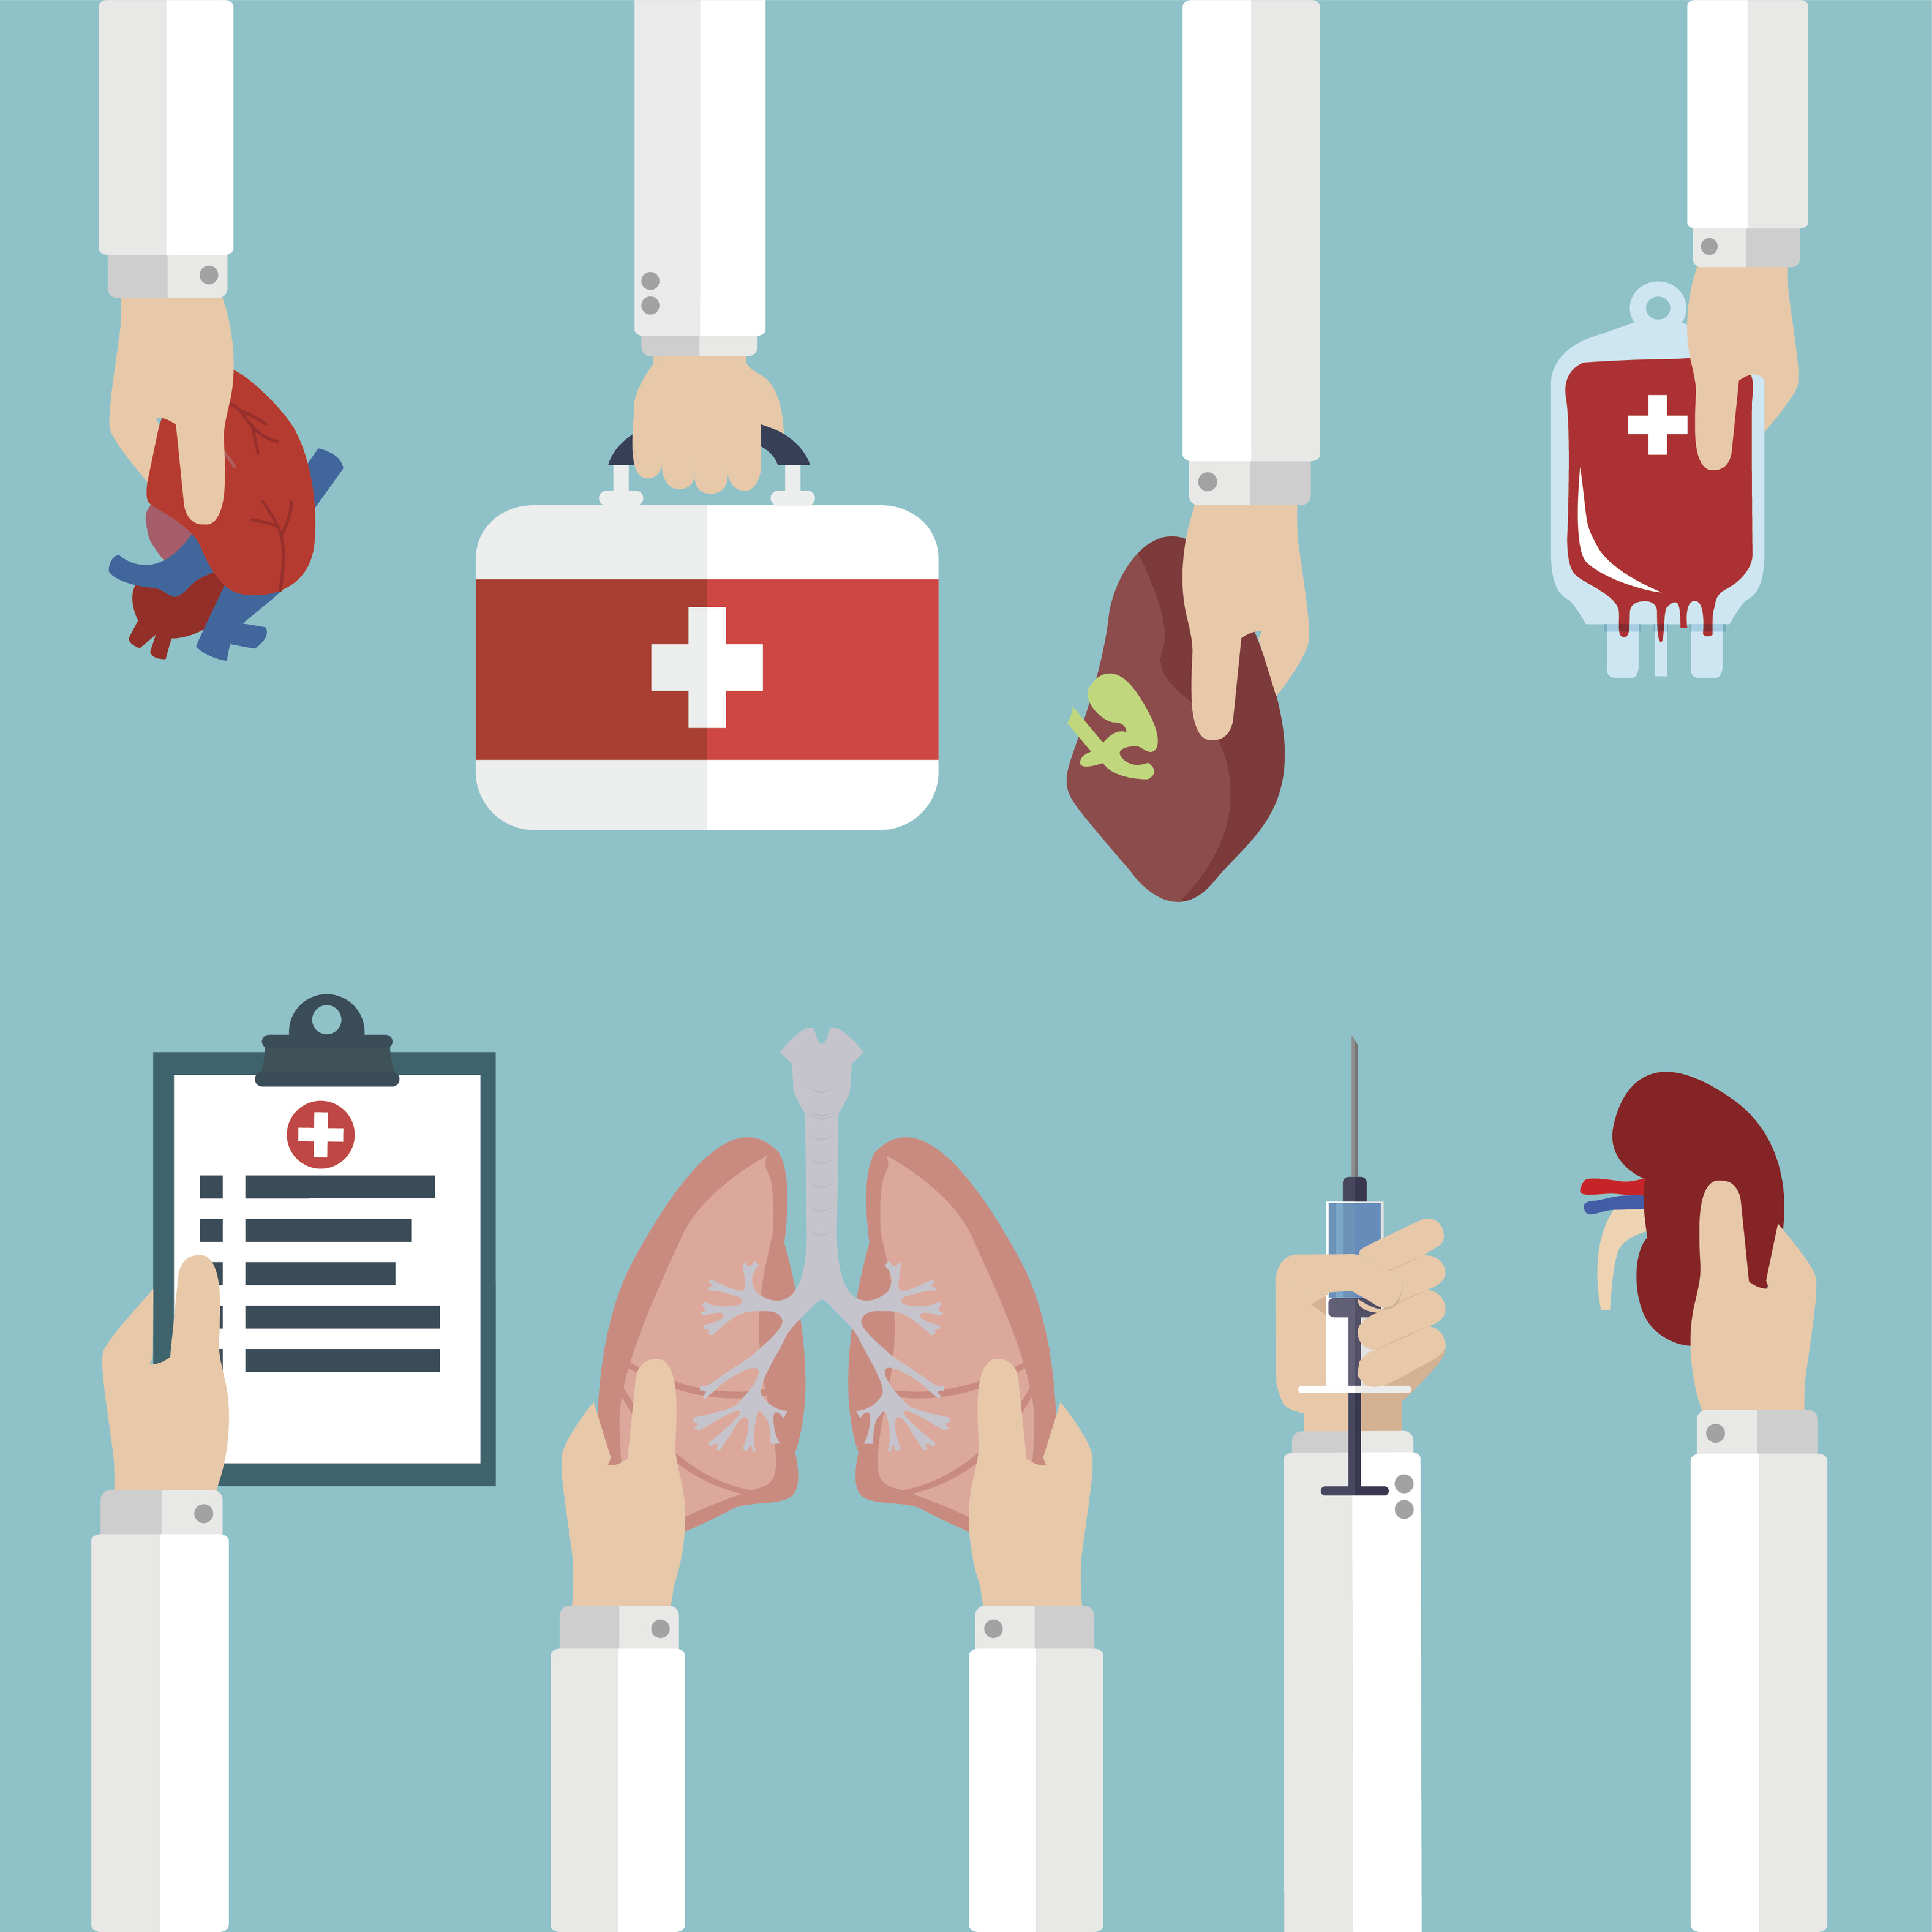 Organ donation illustrated image